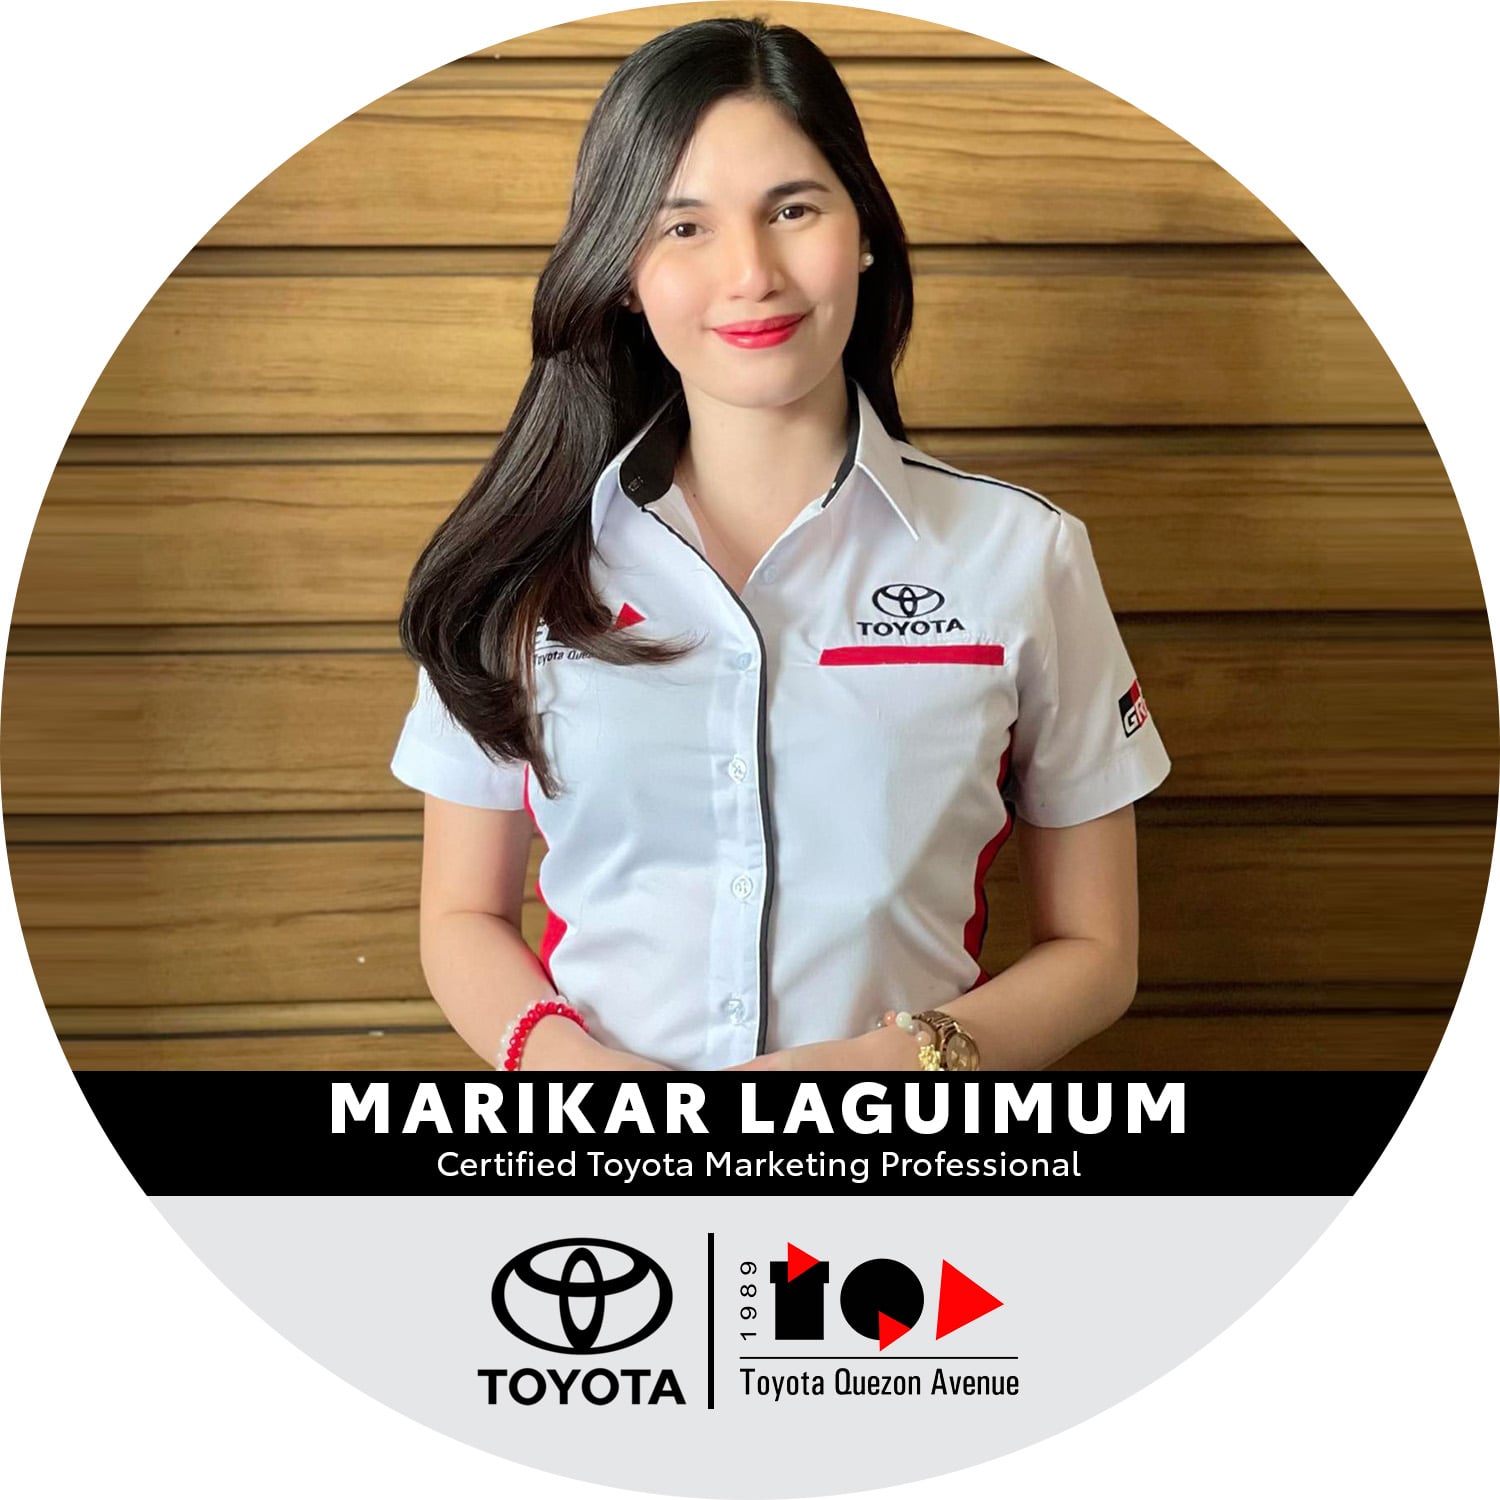 Certified Toyota Marketing Professionals - Marikar Laguimum